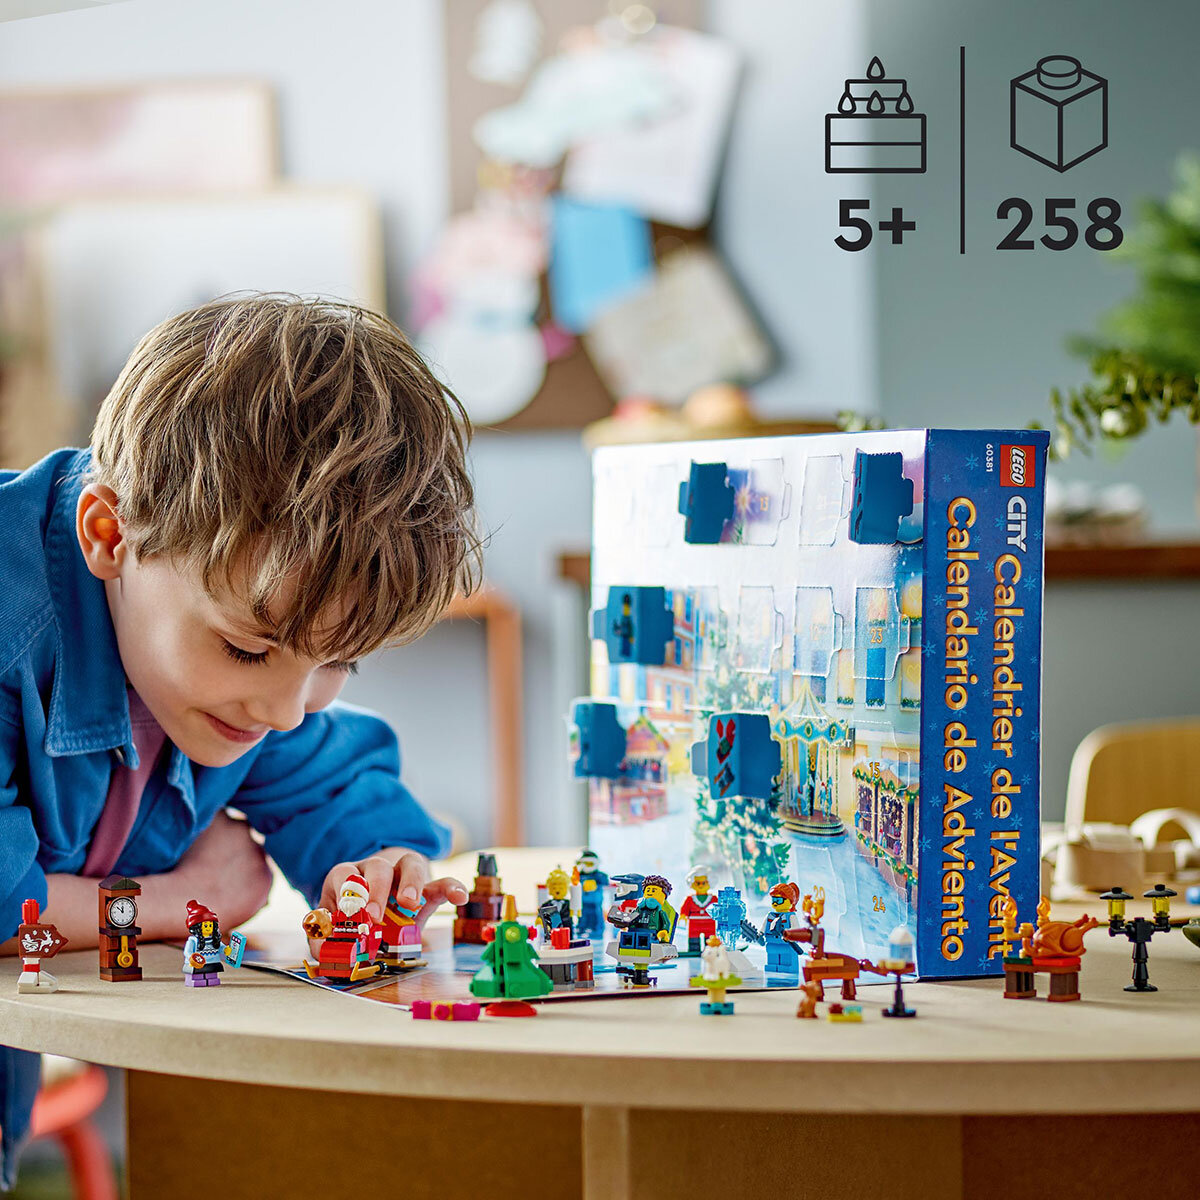 Buy LEGO City Advent Calendar Lifestyle Image at Costco.co.uk